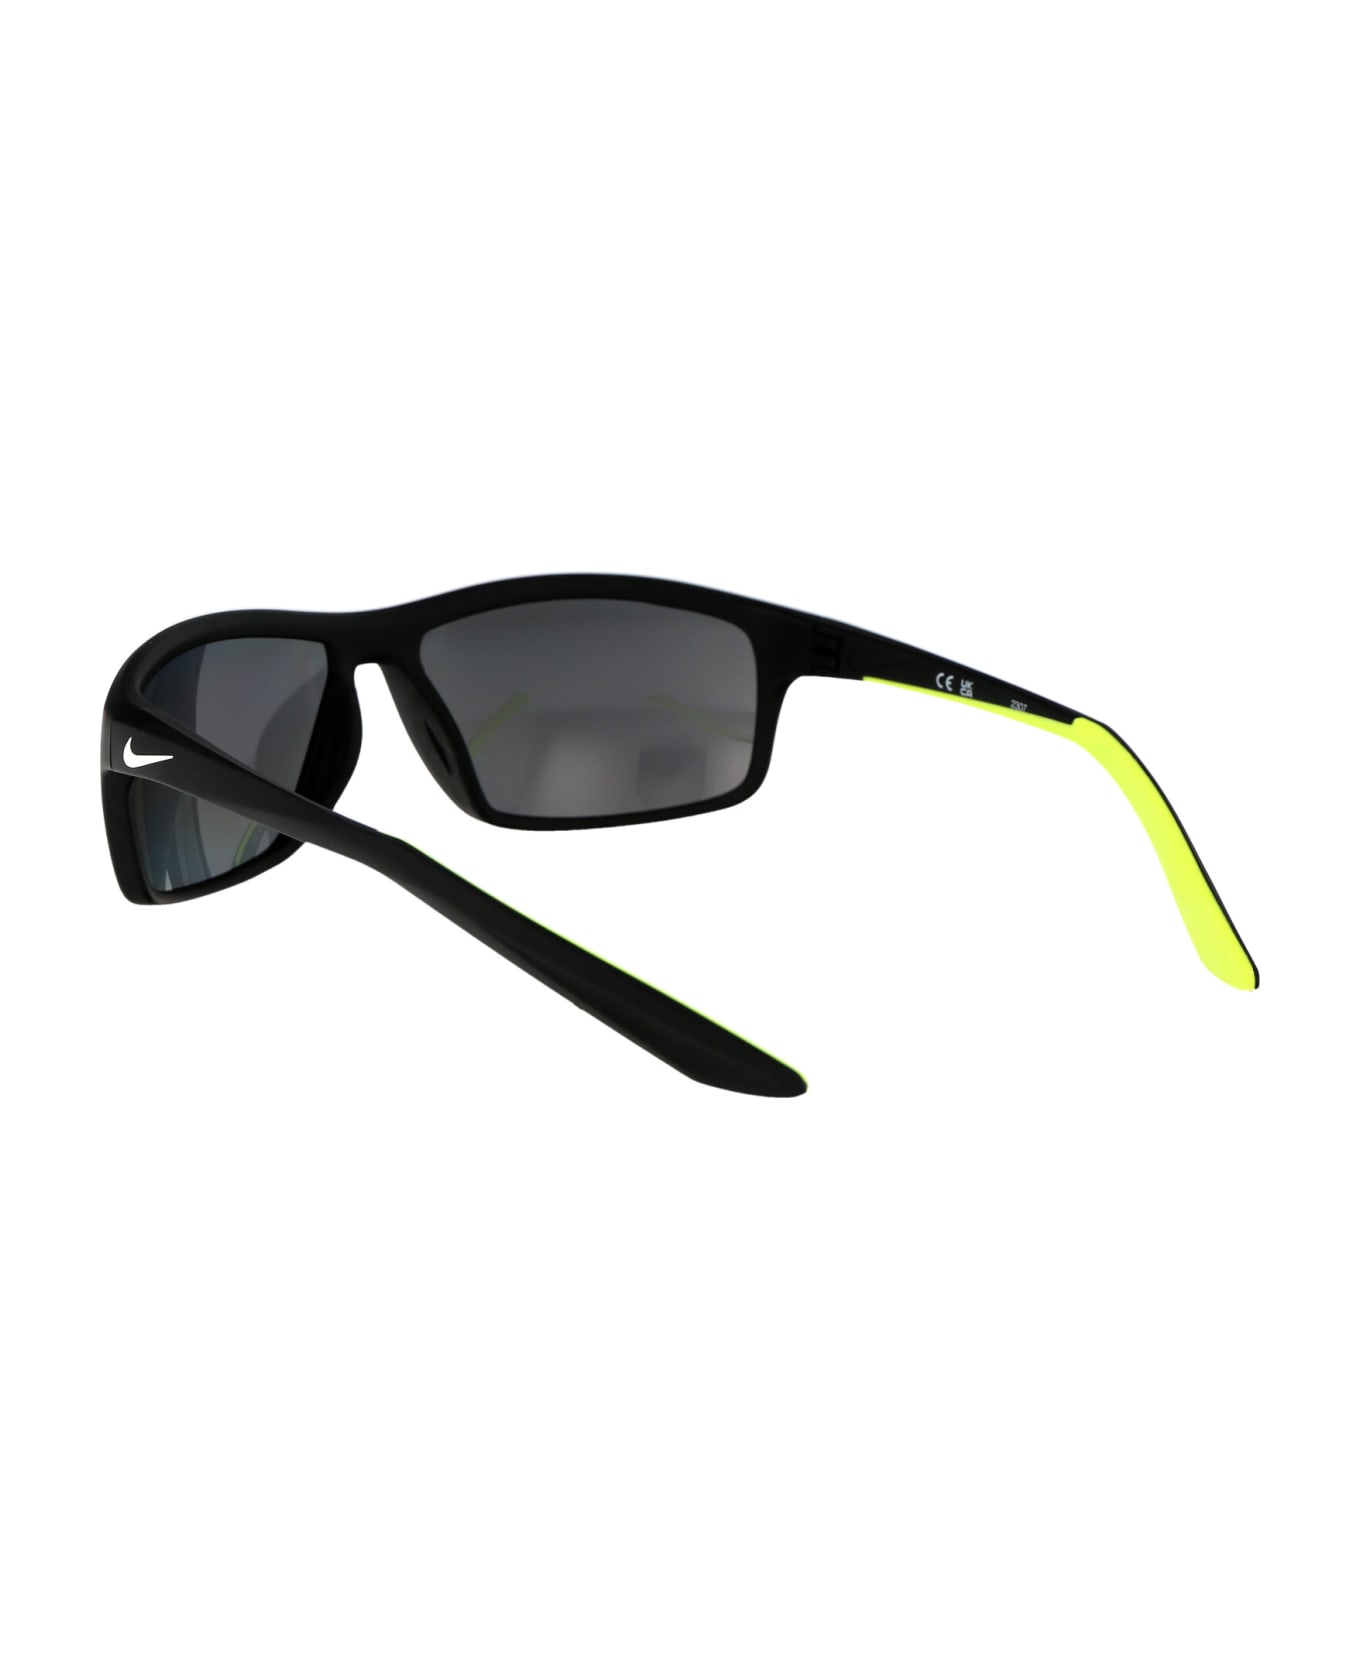 Nike Adrenaline 22 Sunglasses - 011 GRET W/ SILVER FLASH